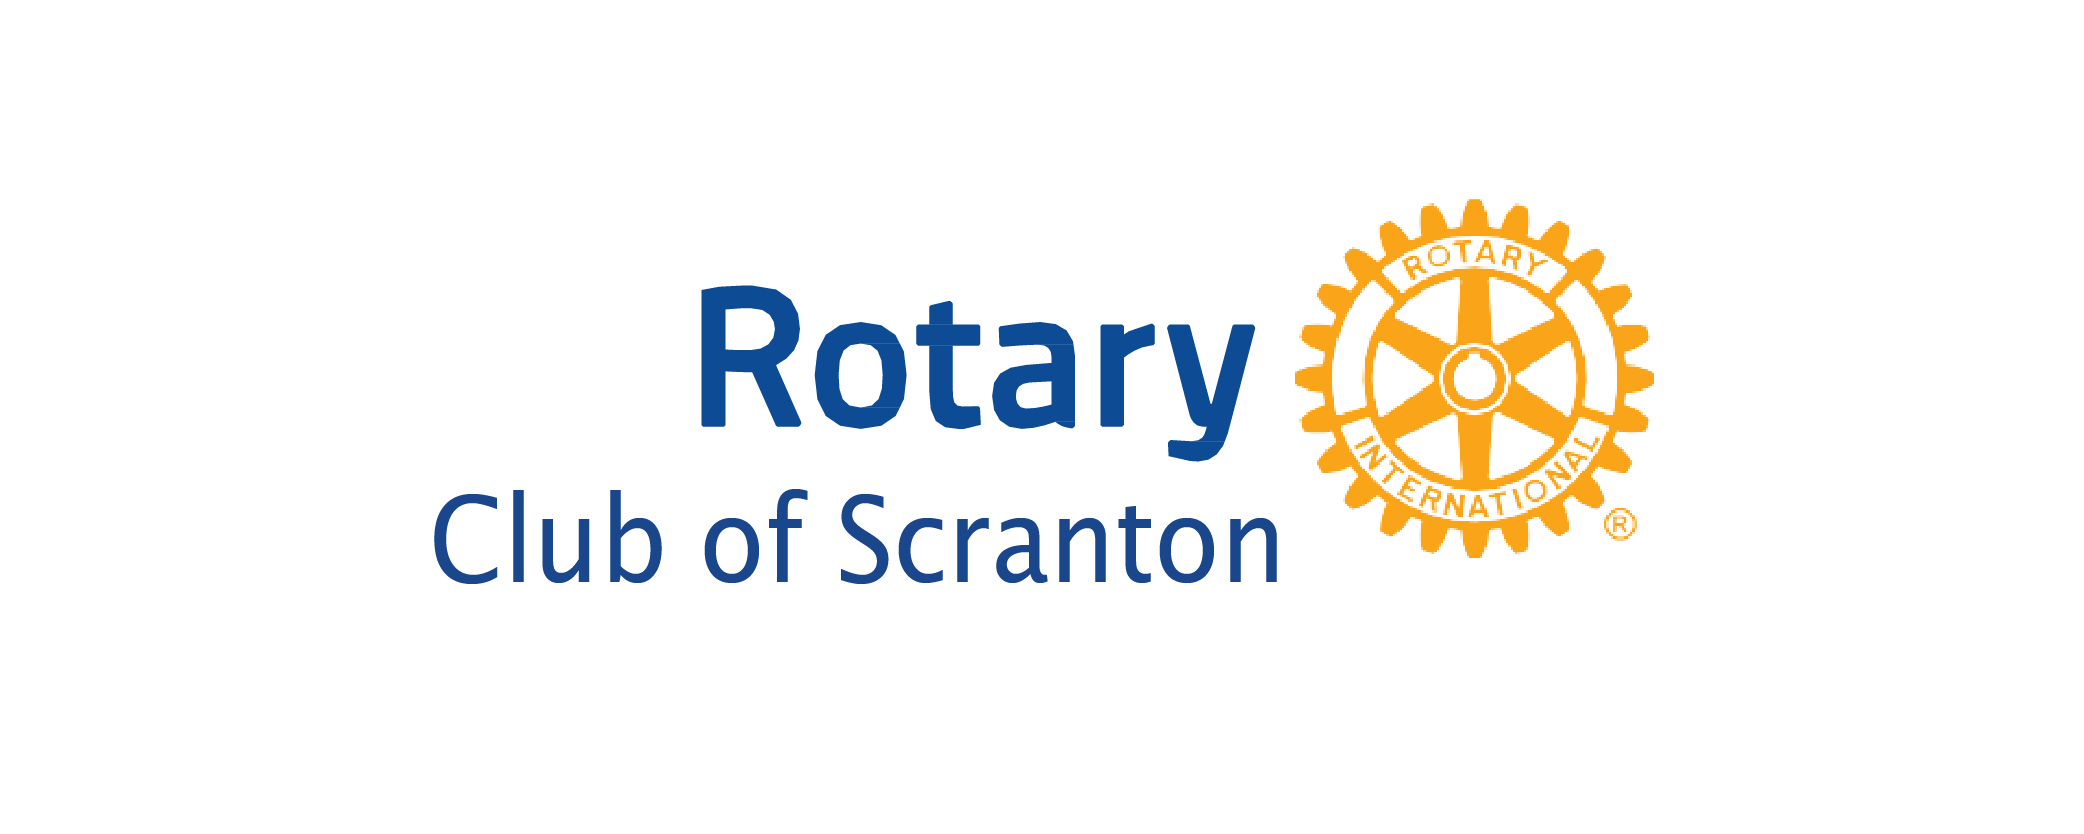 The Rotary Club of Scranton Hosts World Polio Day